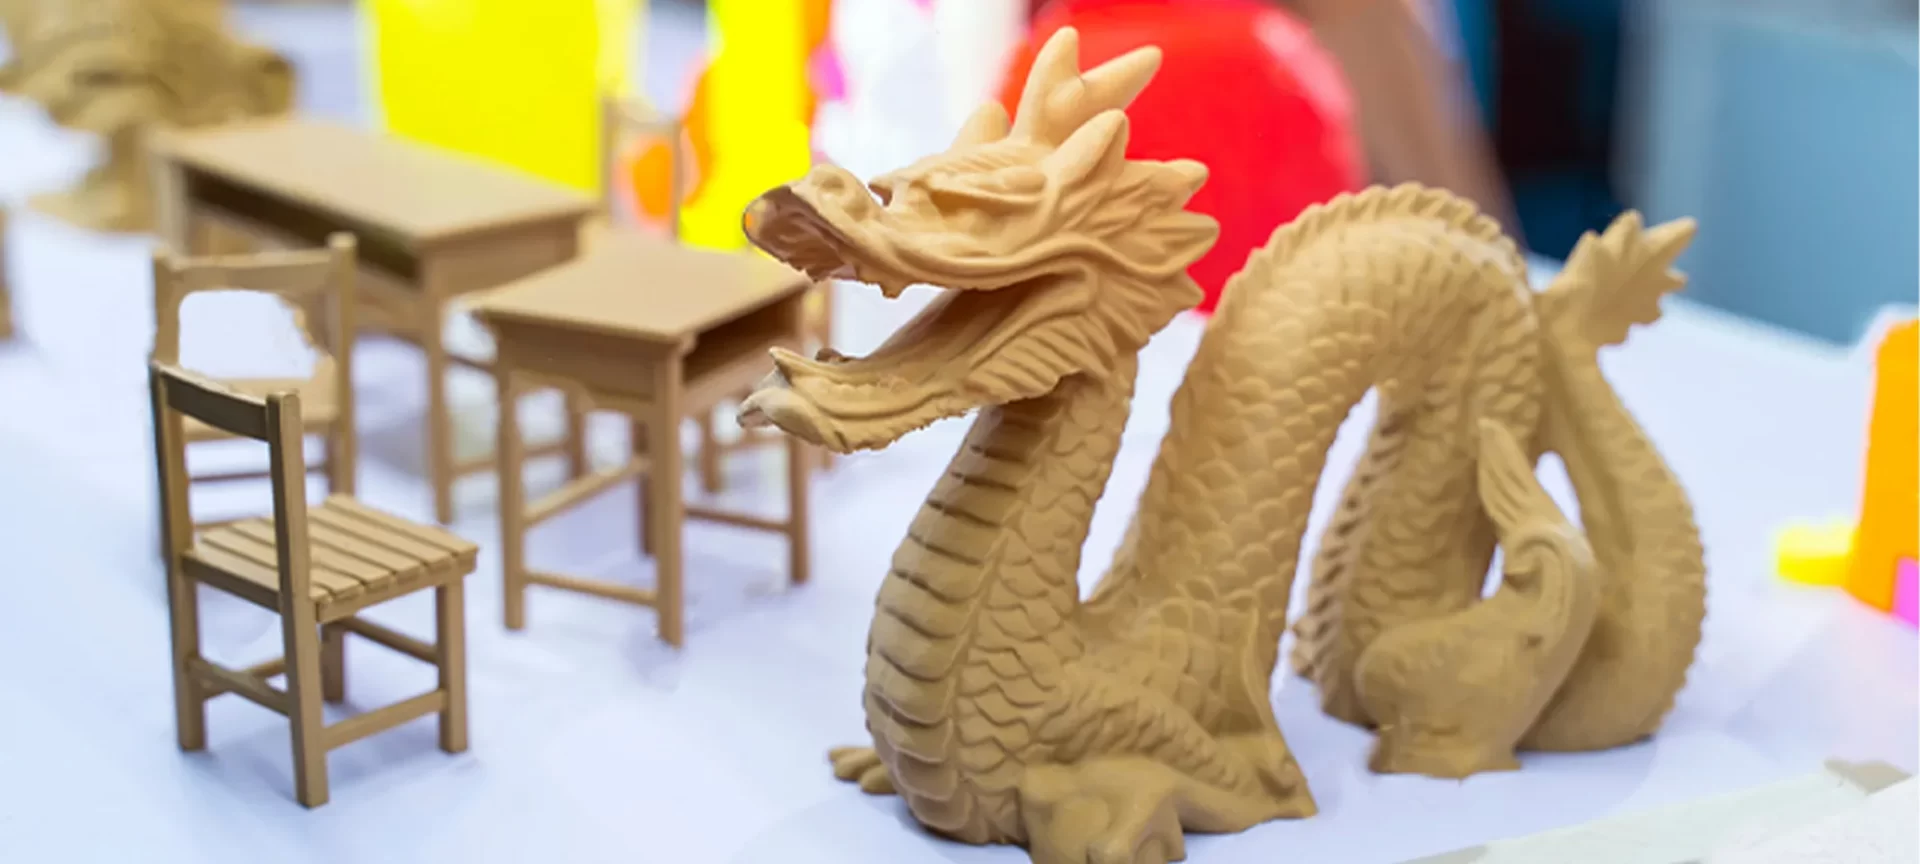 3D printed dragon